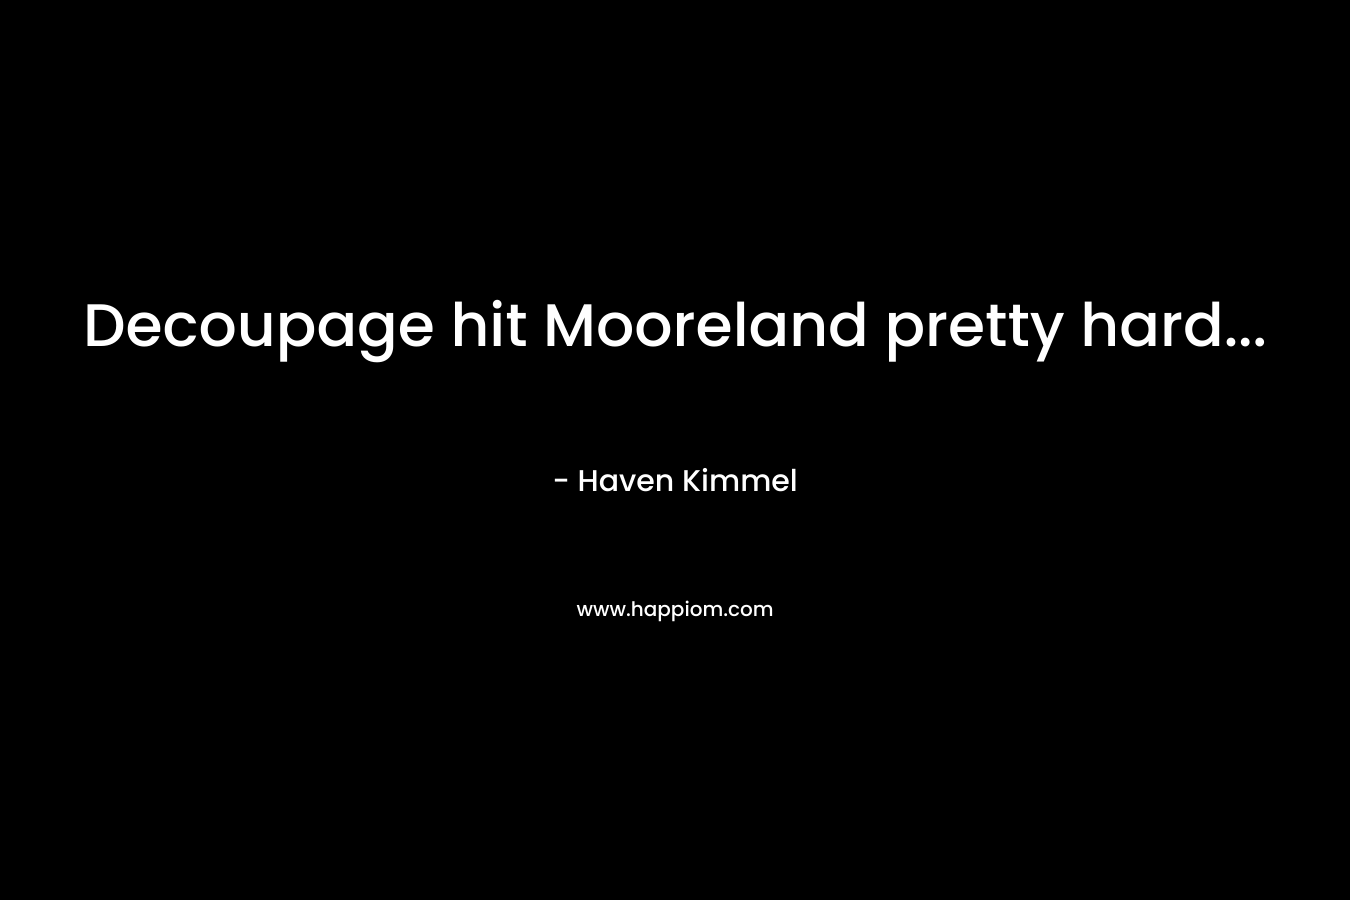 Decoupage hit Mooreland pretty hard...